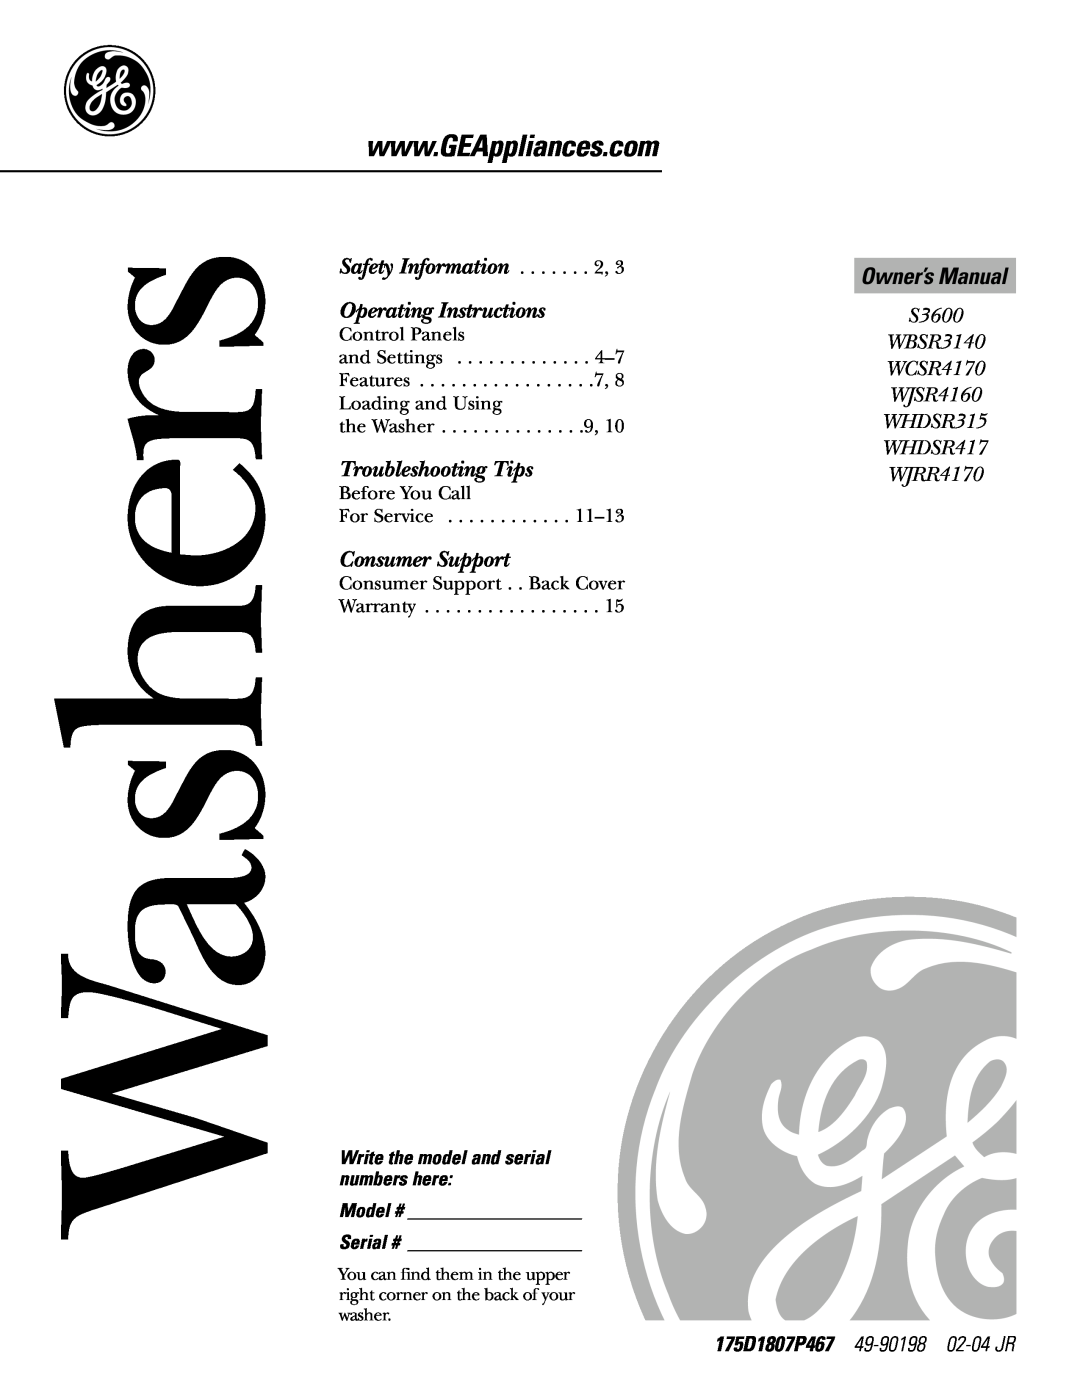 GE WBSR3140, S3600 owner manual Owner’s Manual, 175D1807P467 49-90198 02-04JR, Washers, Safety Information . . . . . . . 2 